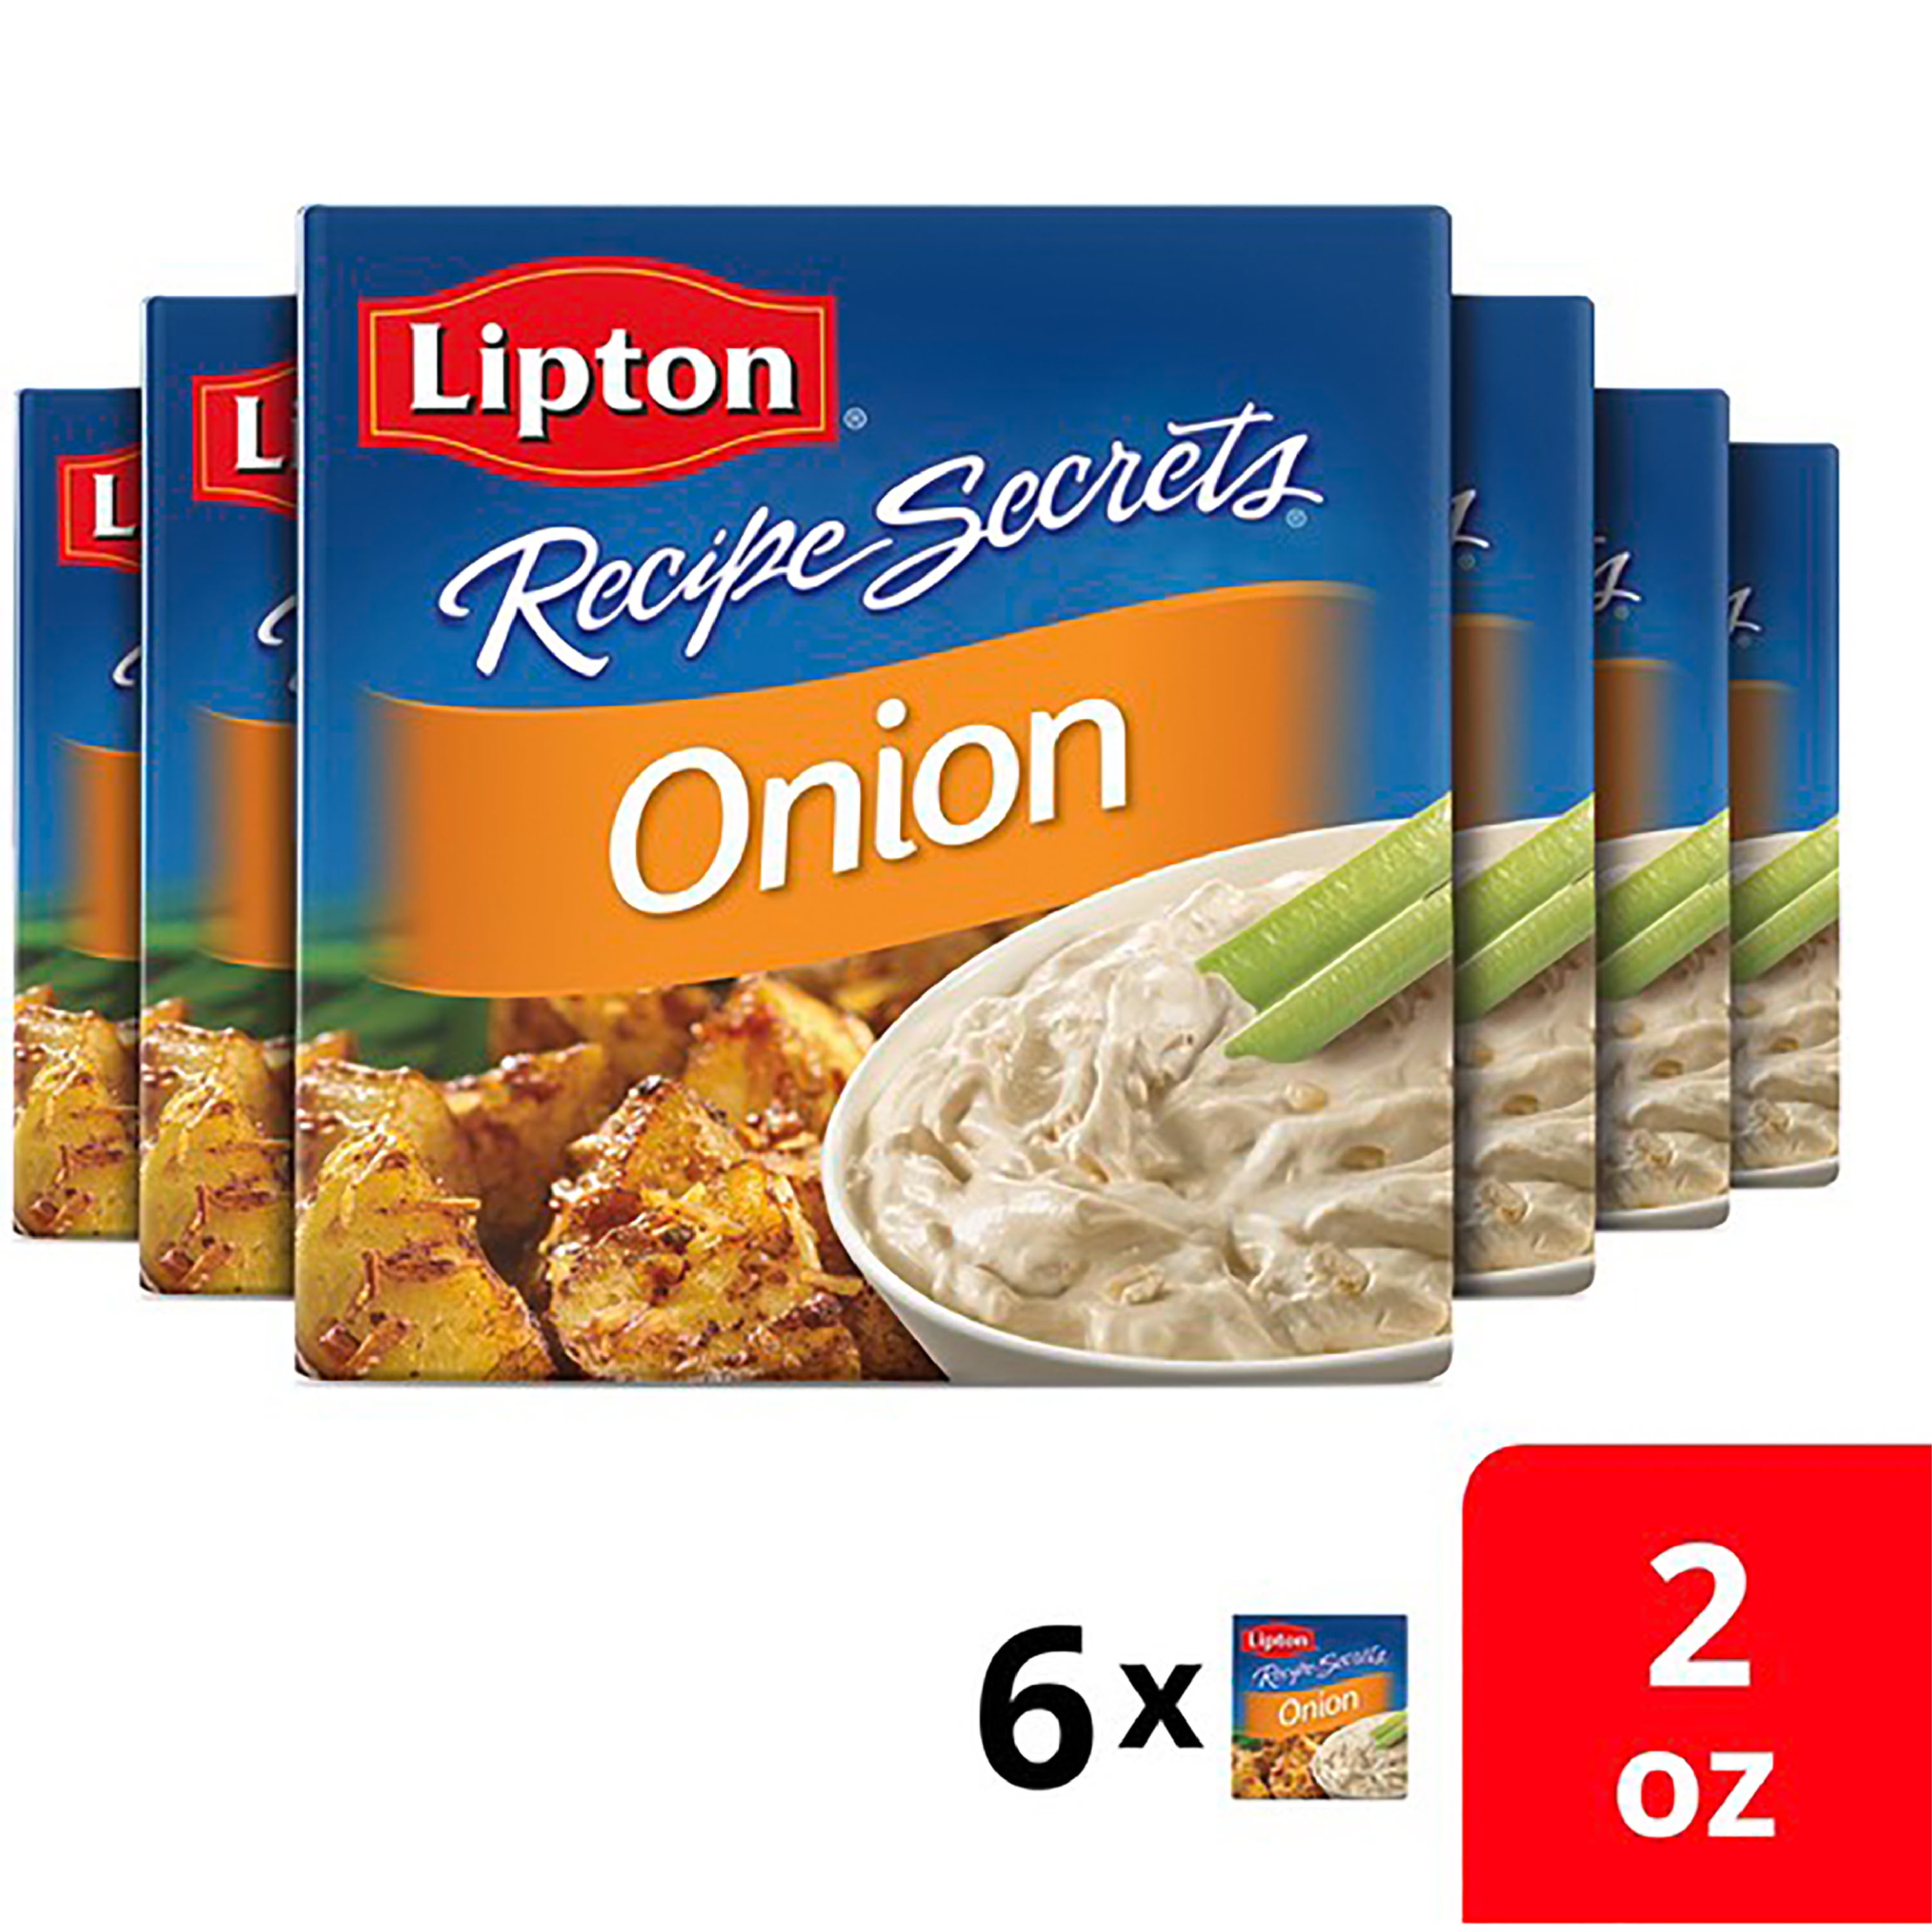 Buy (6 Pack) Lipton Onion Flavor Recipe Secrets Soup and Dip Mix 2 oz at Wa...